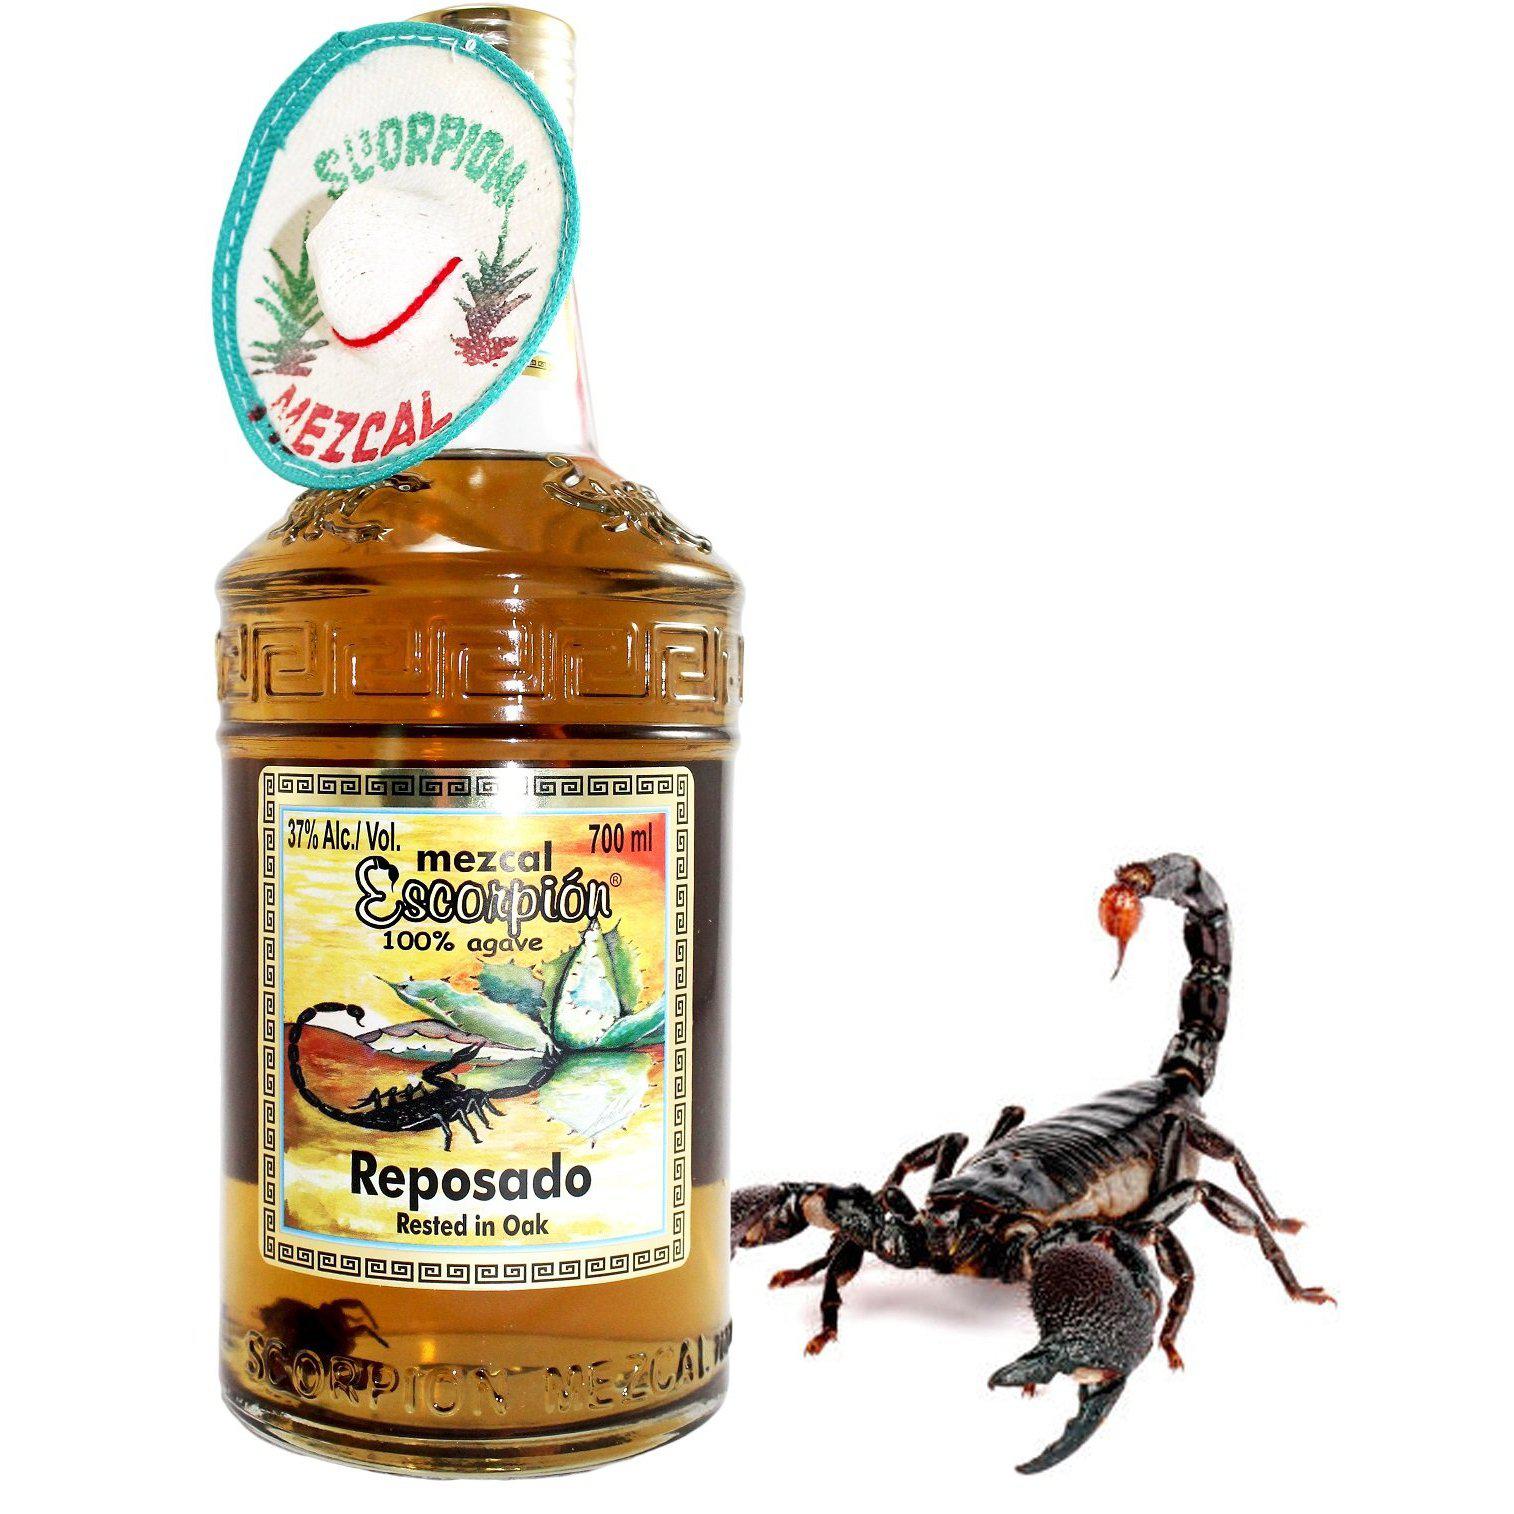 Scorpion Mezcal Reposado Tequila 700ml (Vintage Limited Edition)